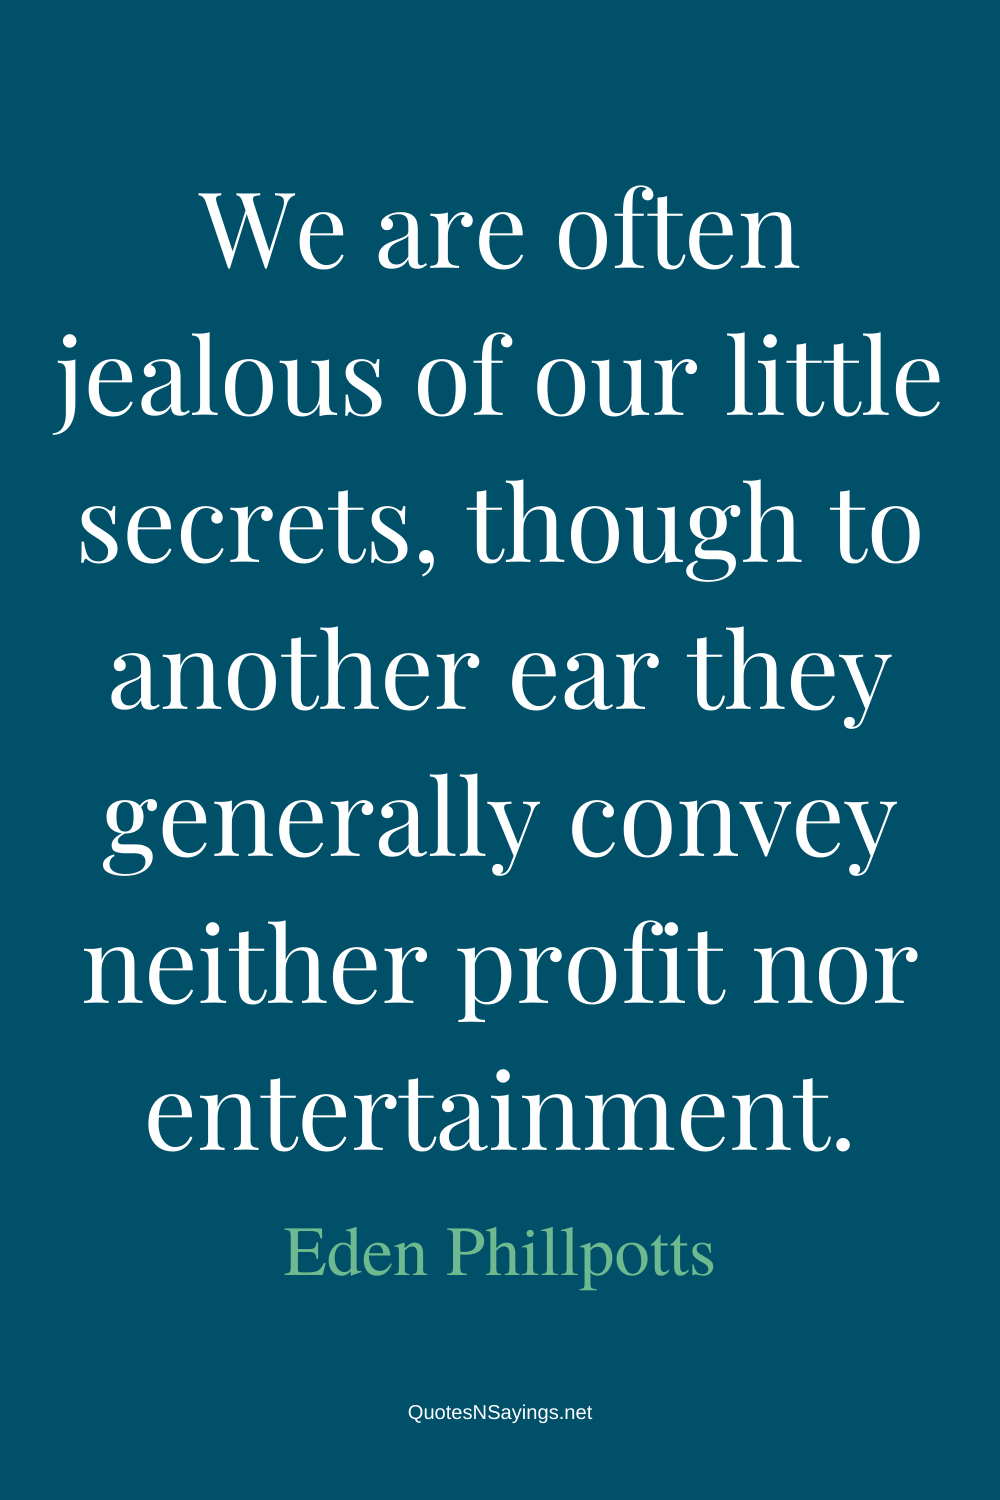 Eden Phillpotts quote - We are often jealous of our little secrets ...